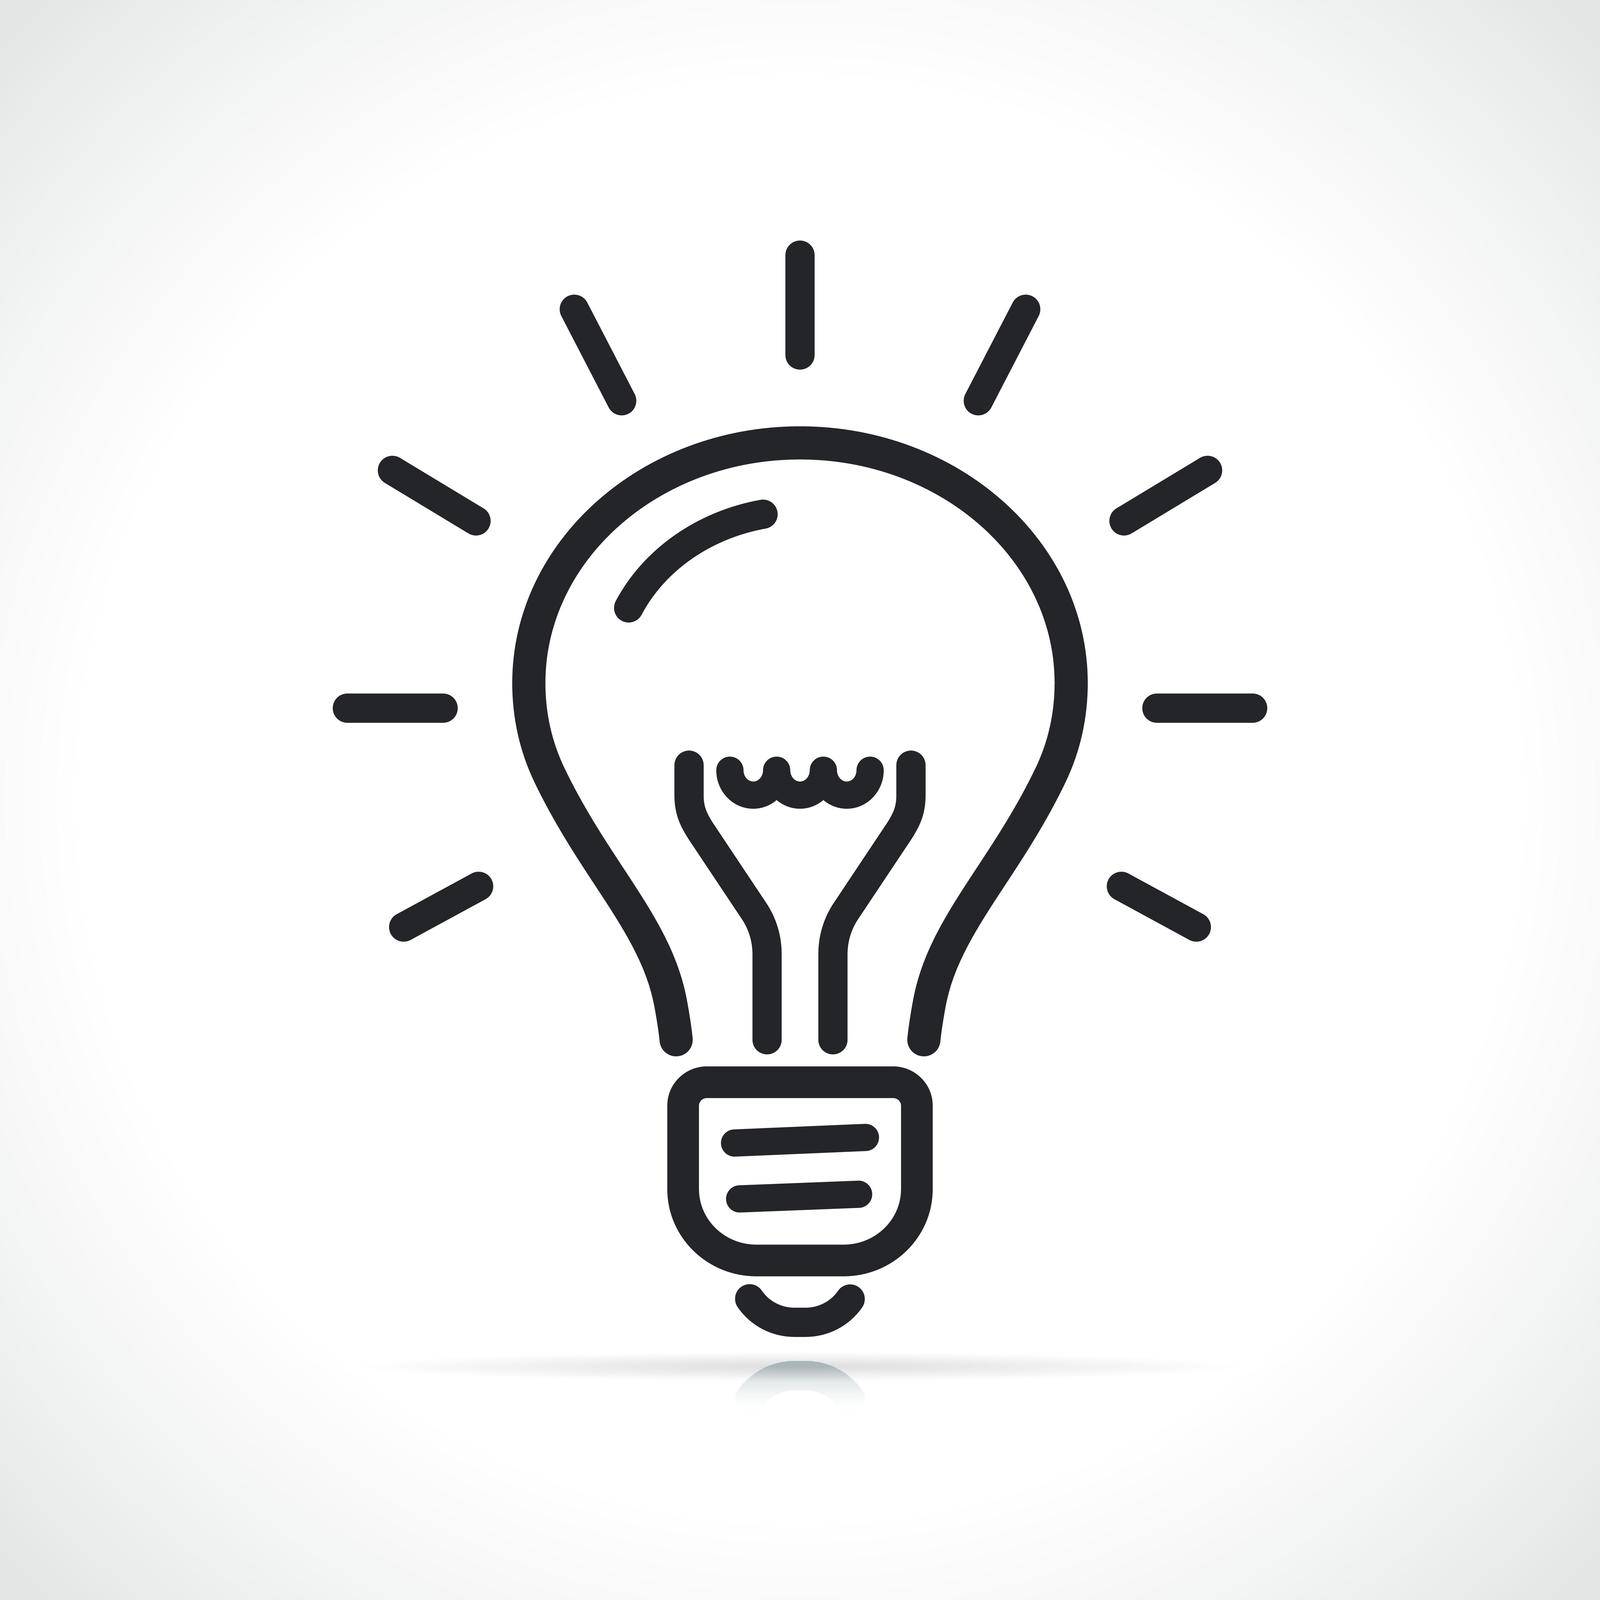 lightbulb or idea thin line icon isolated